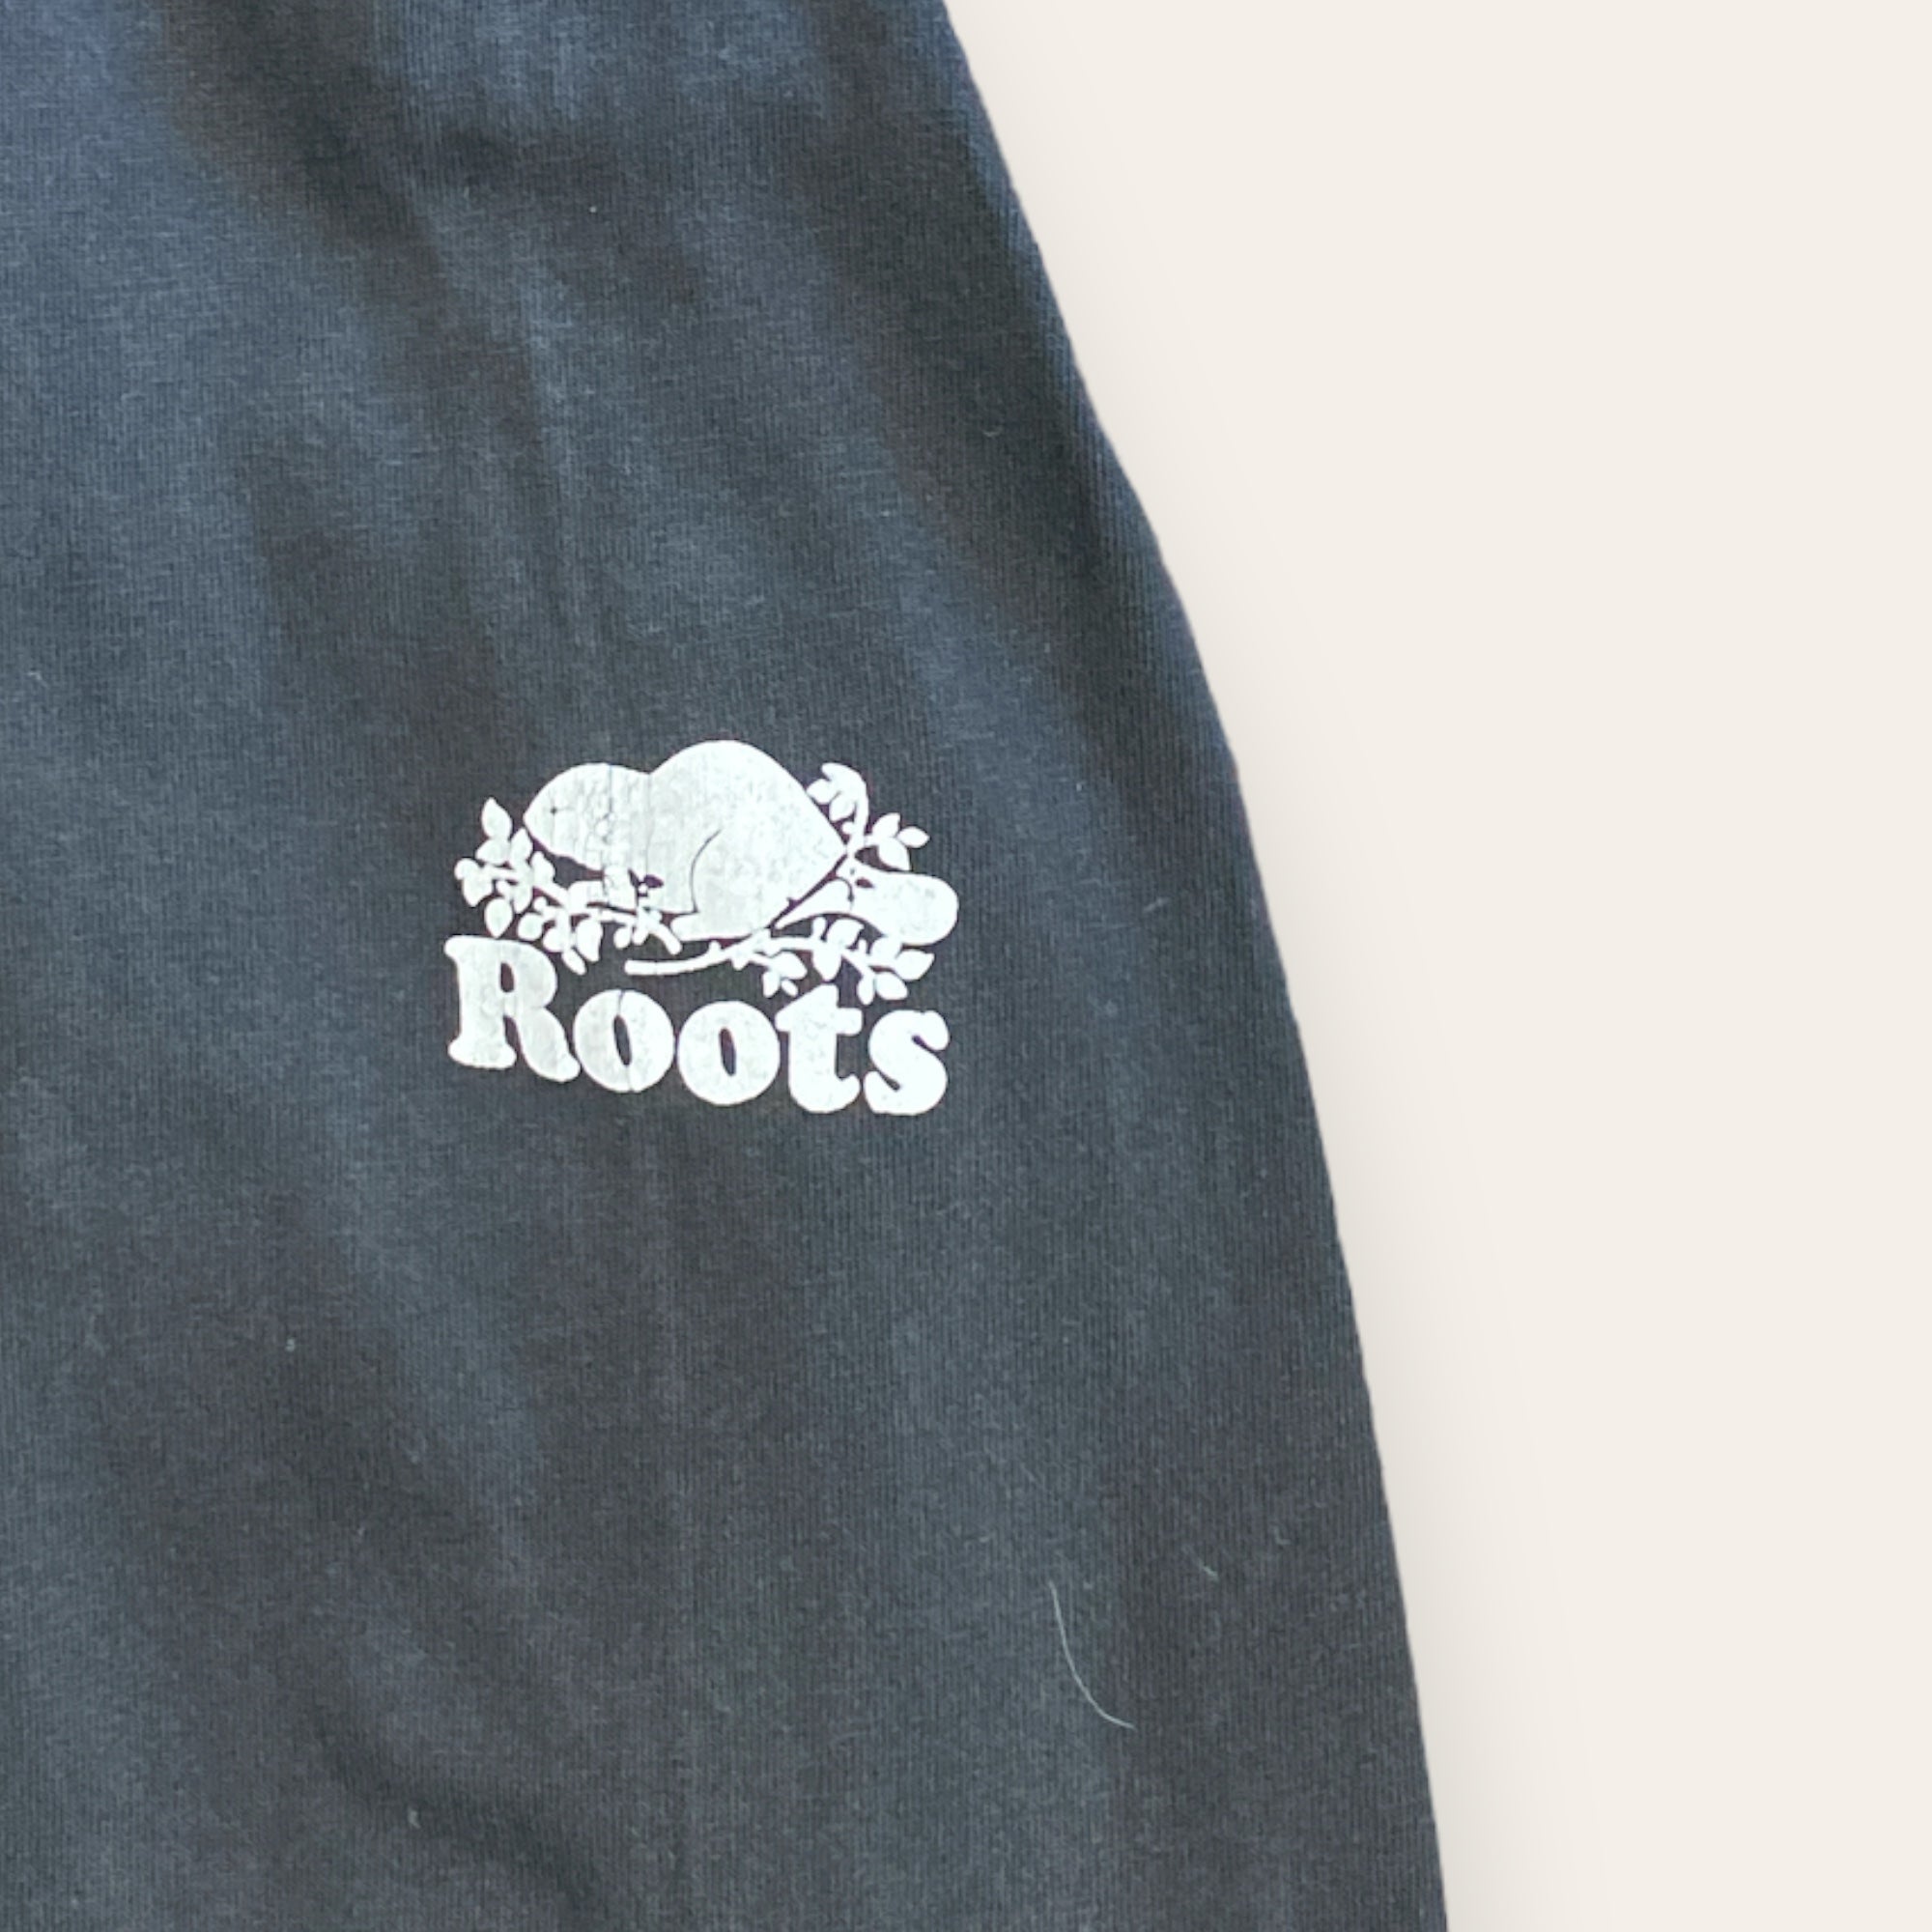 2005 Tiff Roots Long Sleeve Tee Size XL